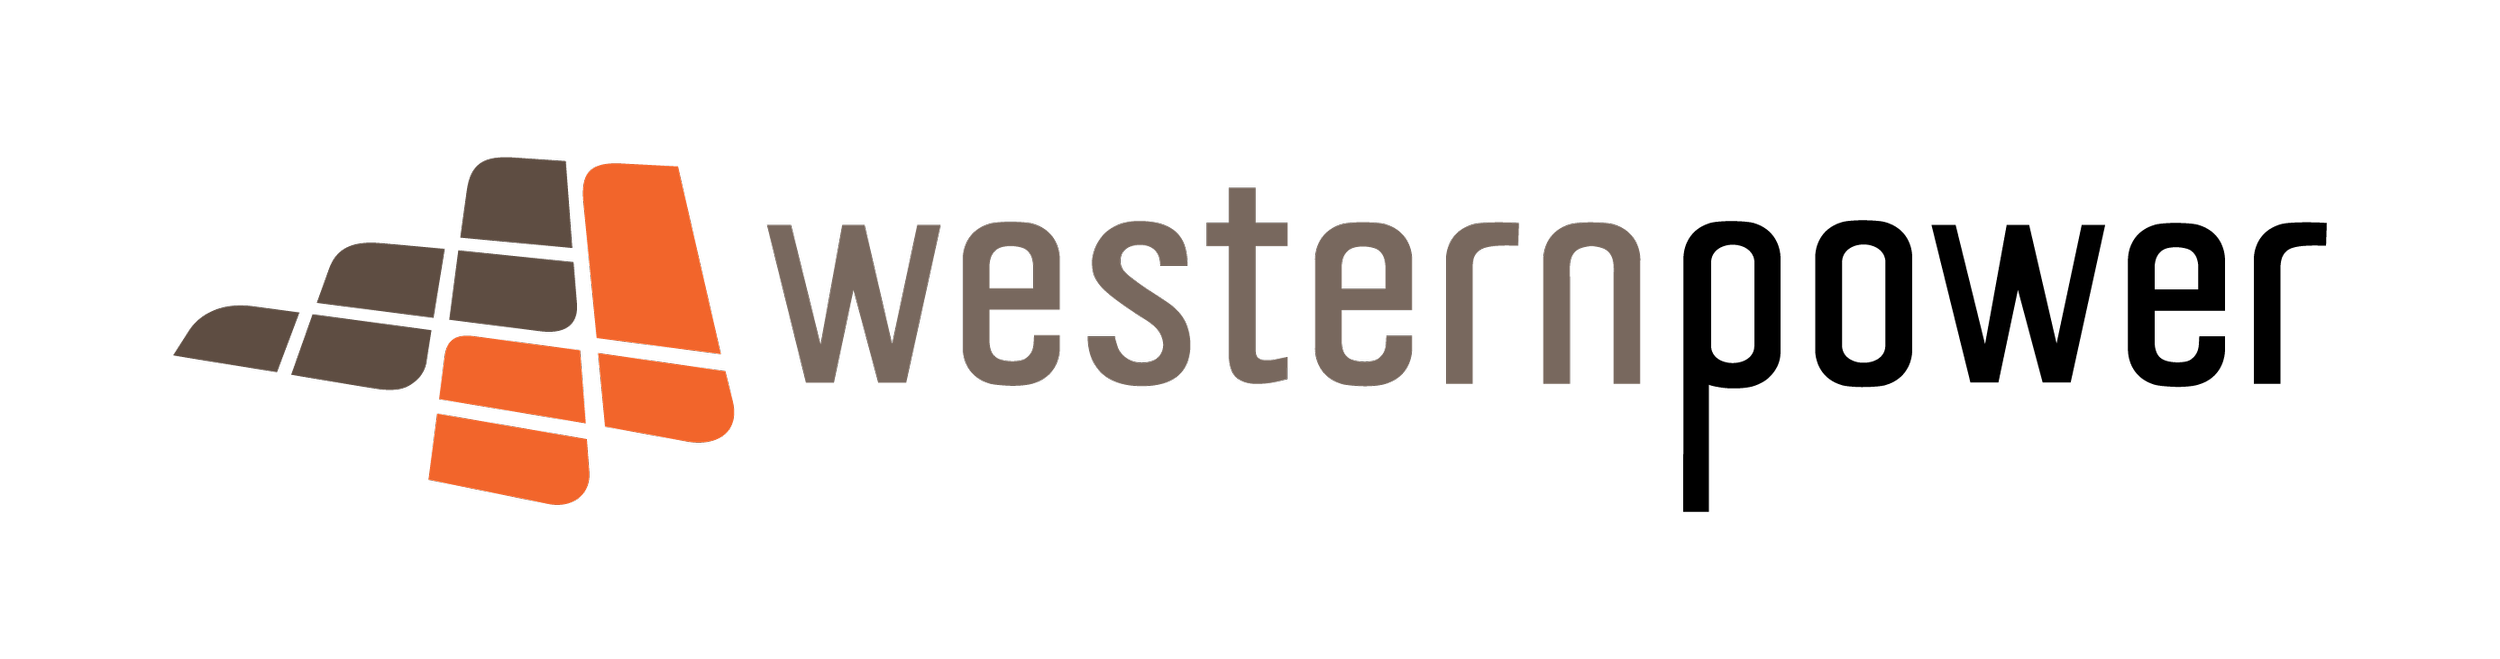 western-power-logo.png